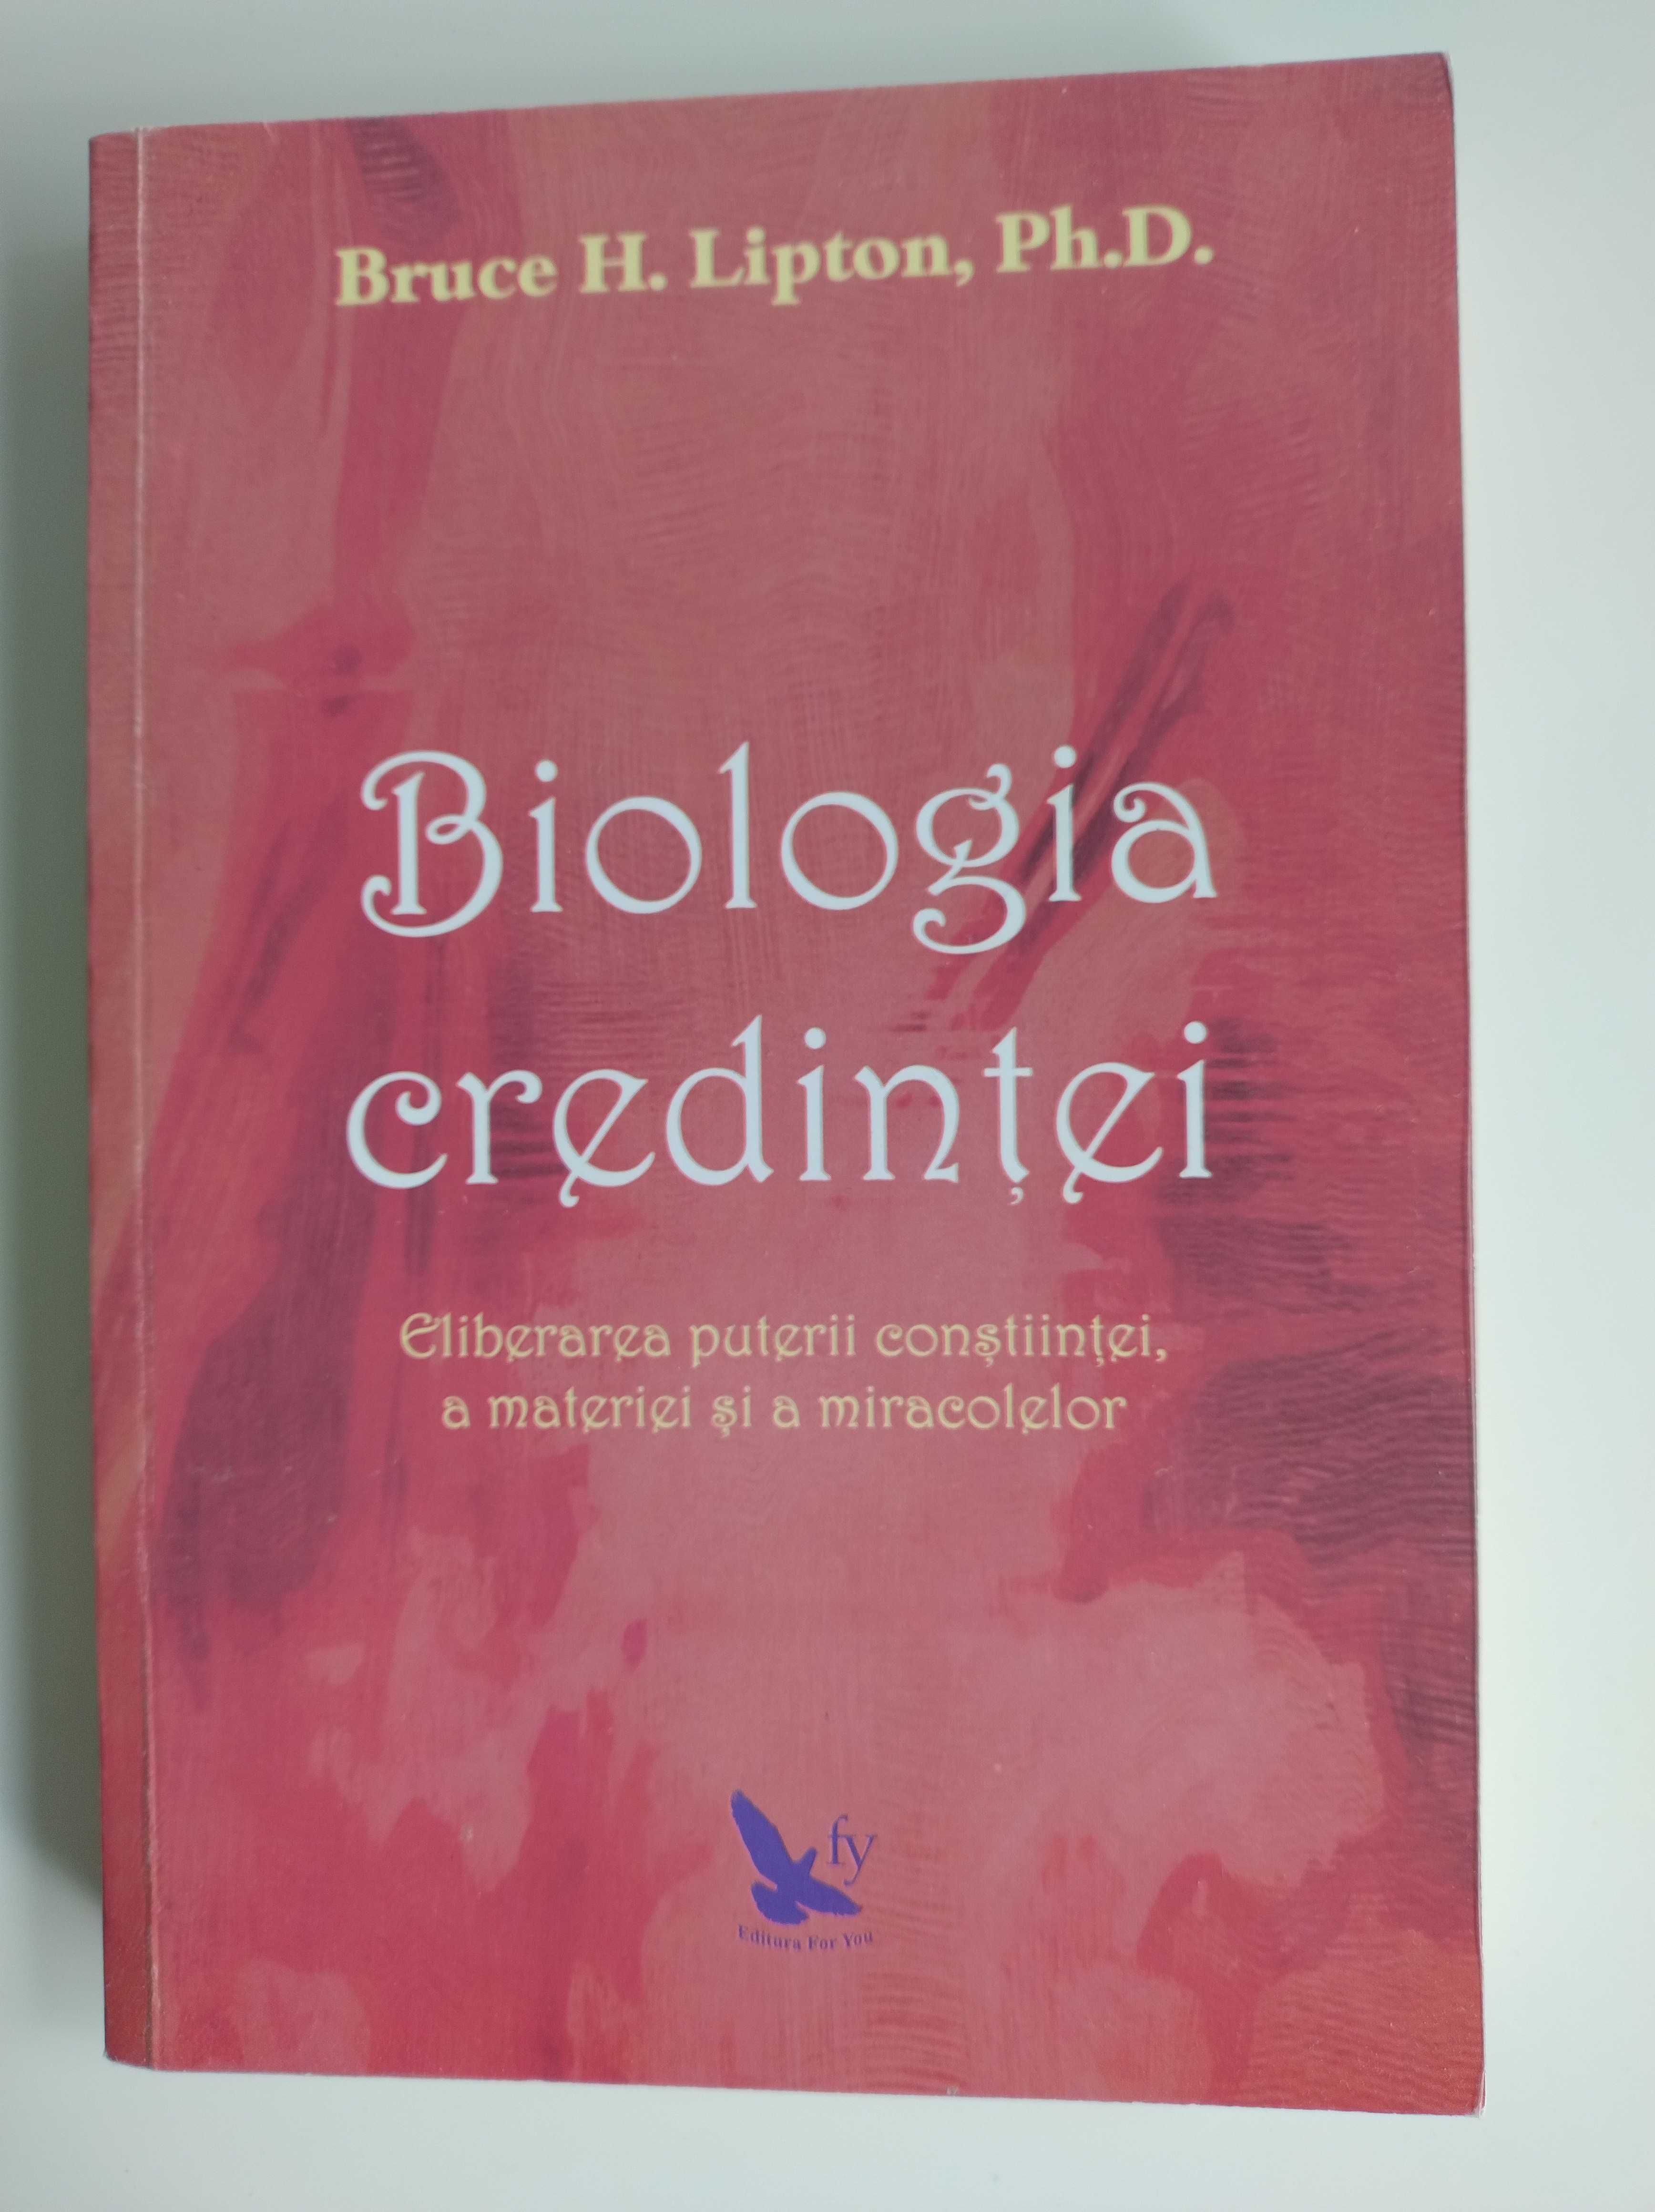 "Biologia credintei", Bruce Lipton